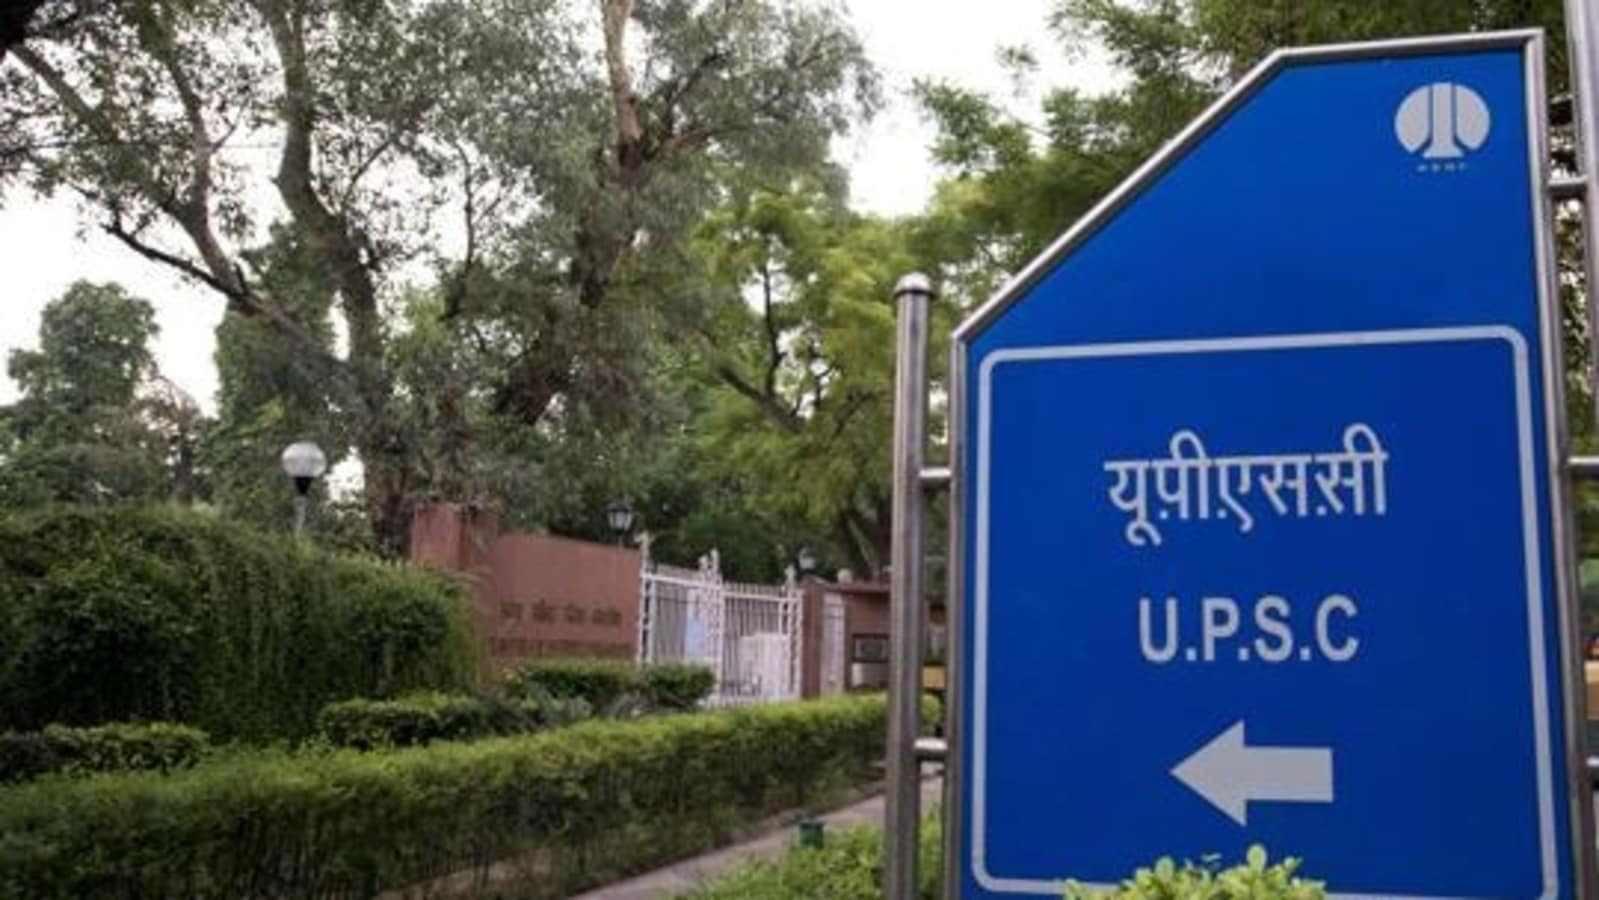 UPSC Chairman: What is UPSC?